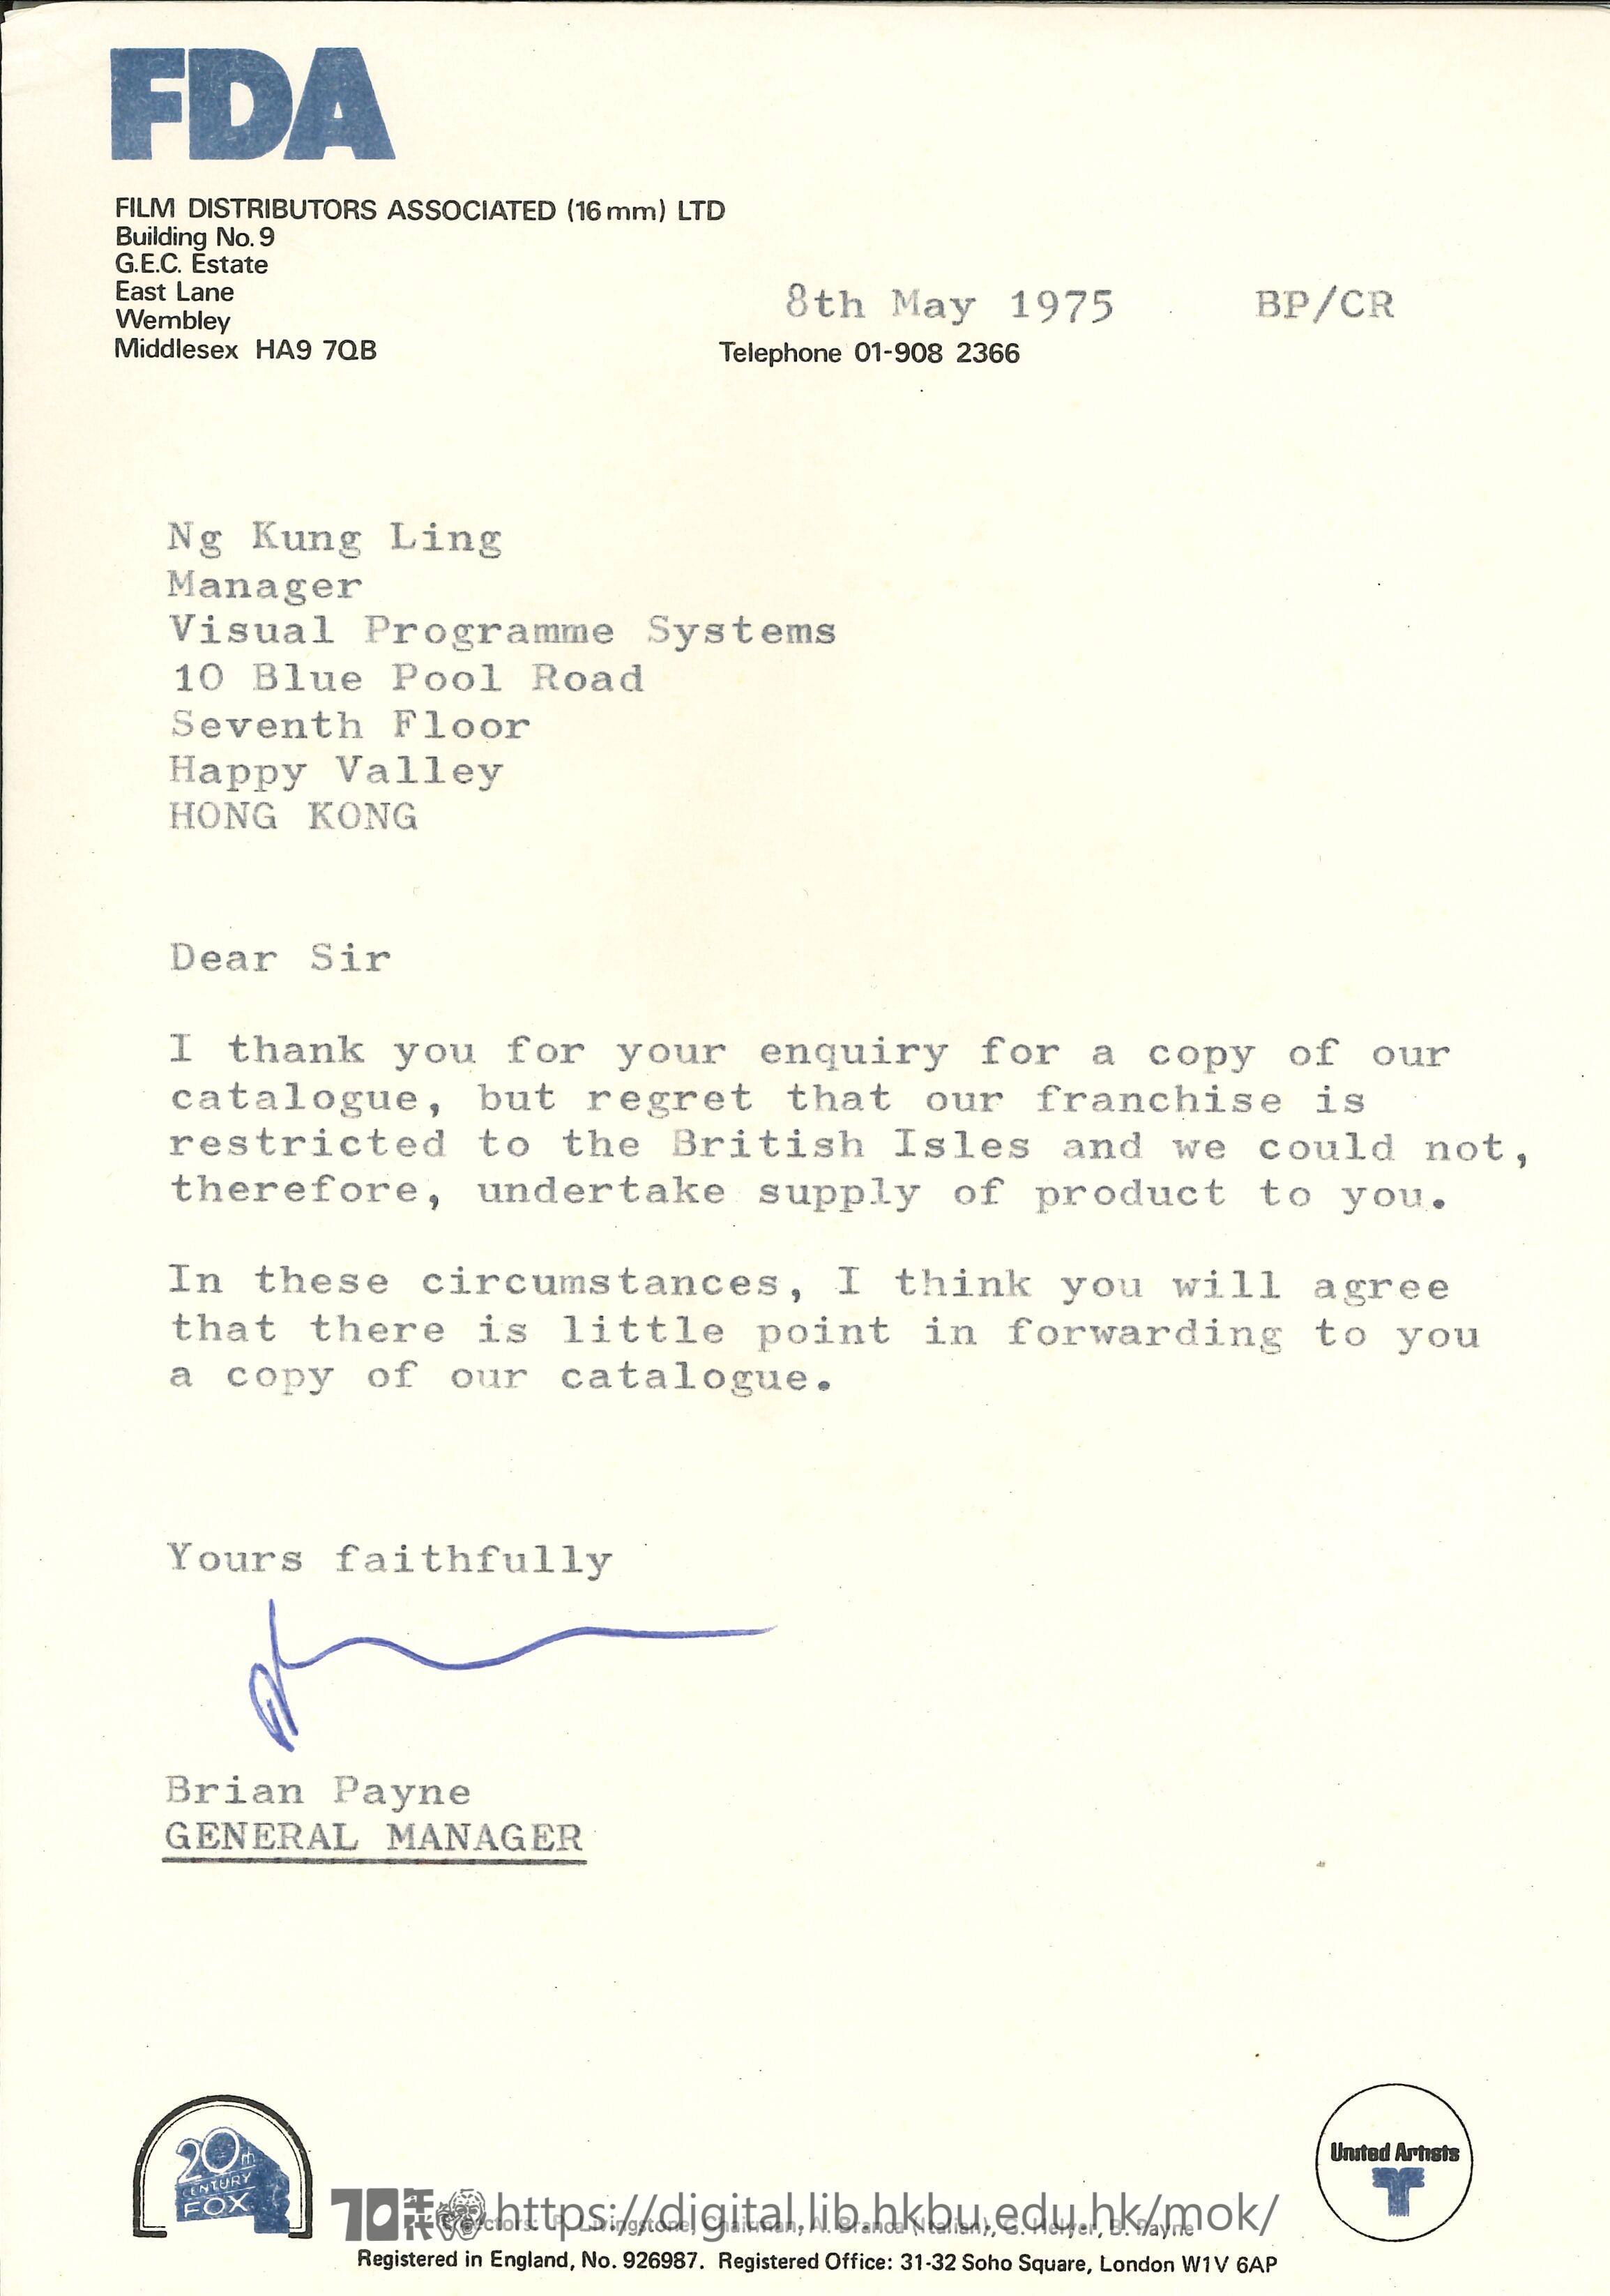   Letter from Brian Payne to Ng Kung Ling PAYNE, Brian 